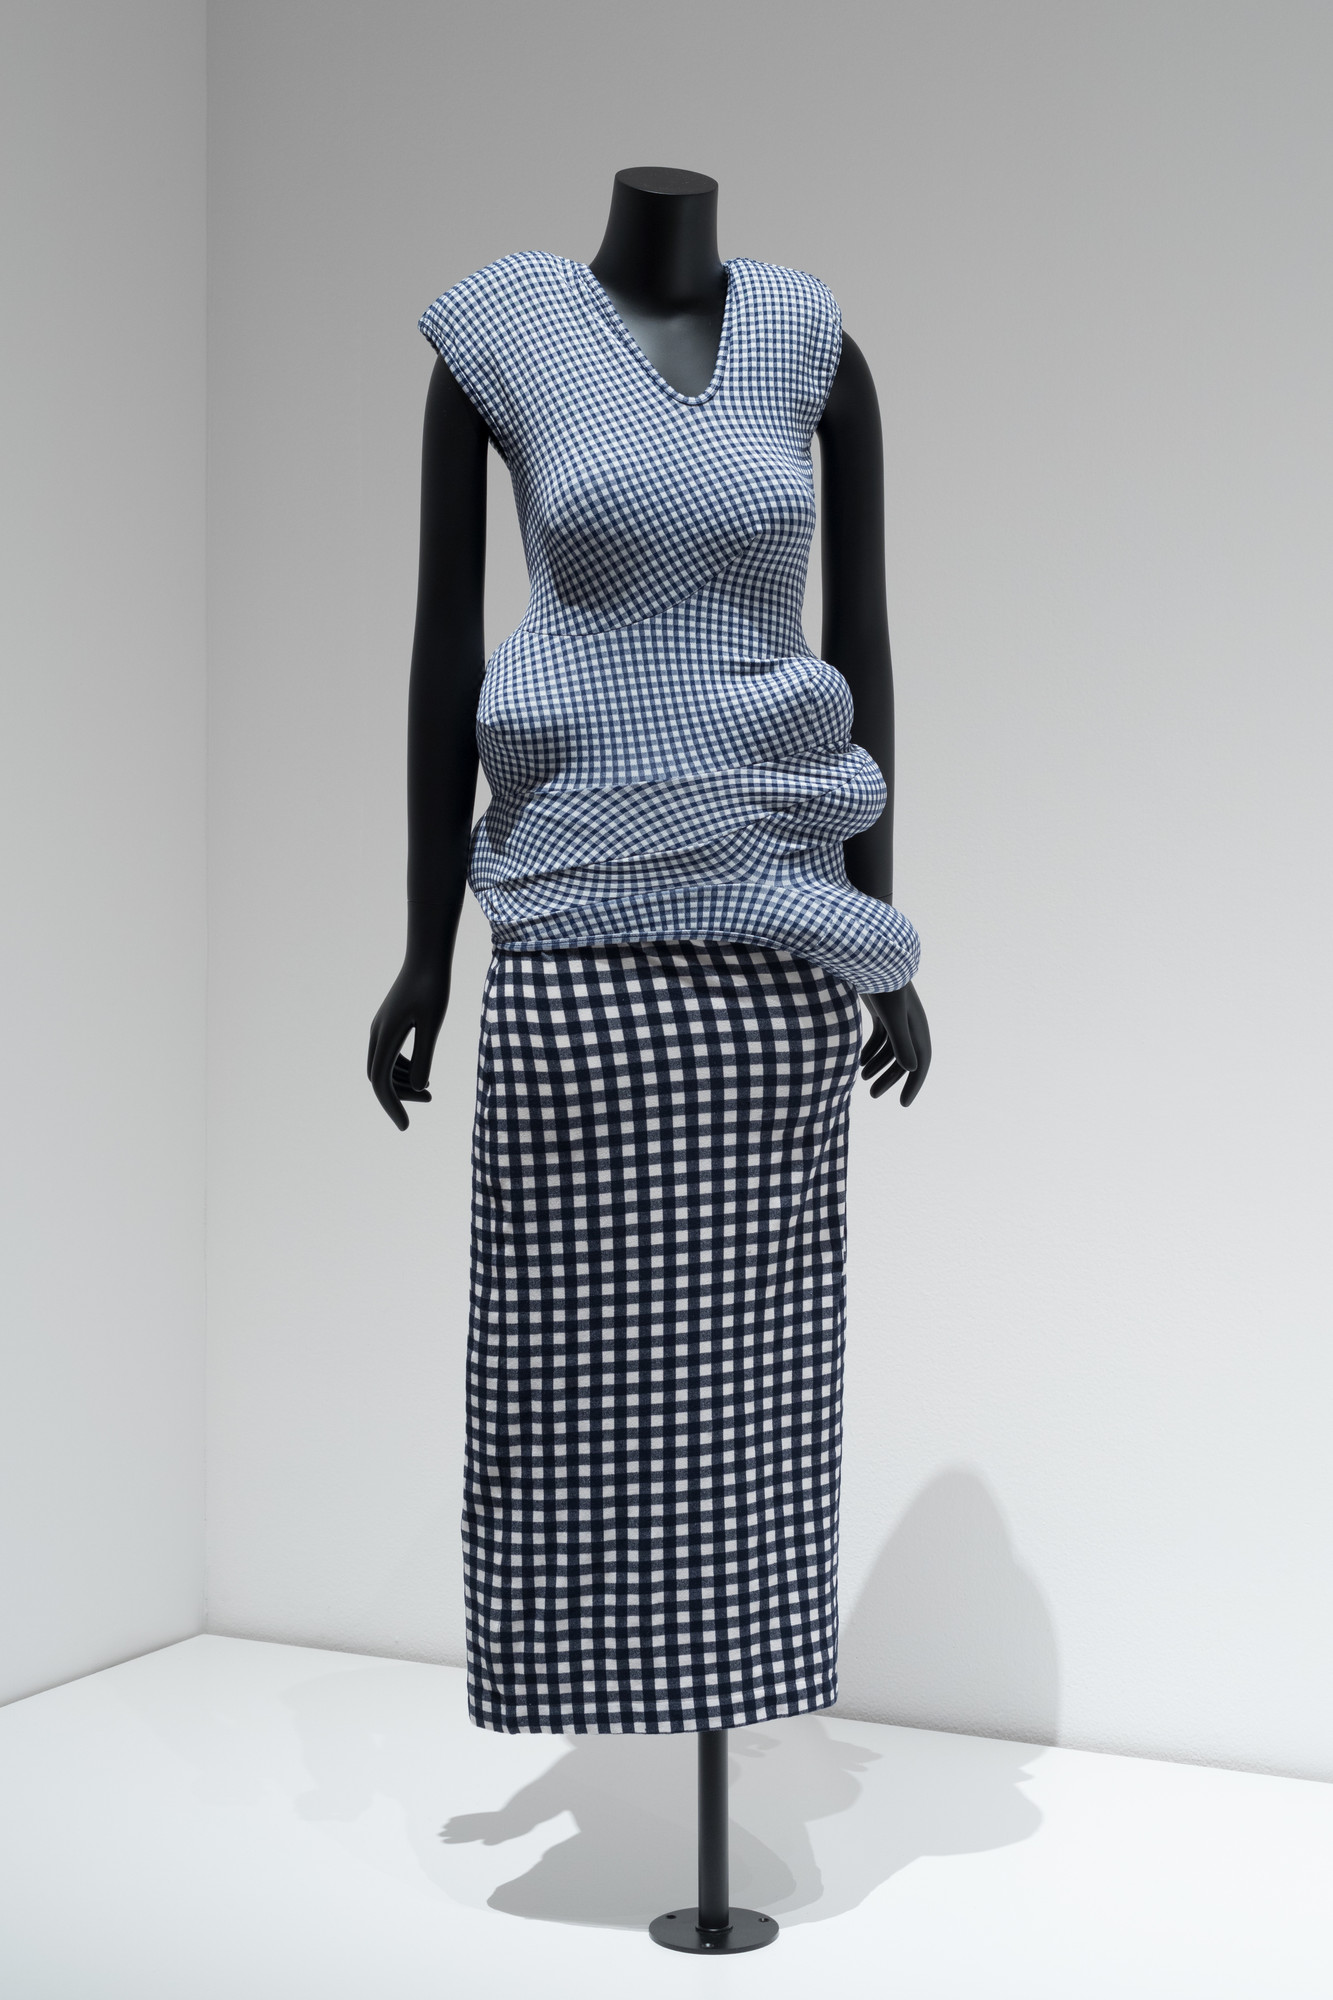 Rei Kawakubo. Comme des Garçons. Body Meets Dress--Dress Body (bodice and skirt). 1997 MoMA